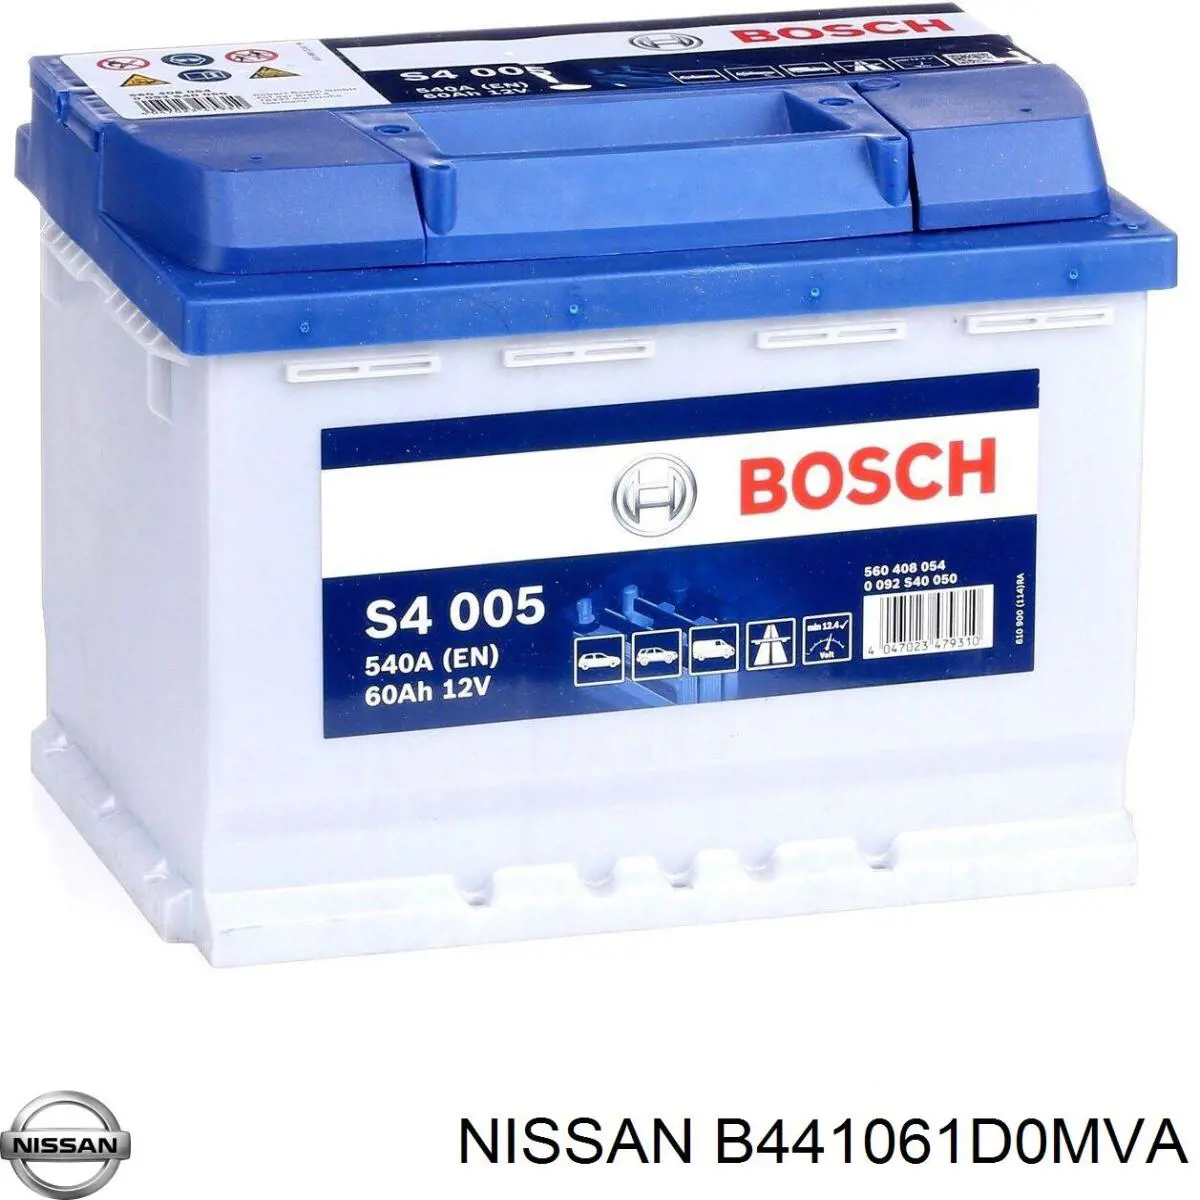 B441061D0MVA Nissan акумуляторна батарея, акб